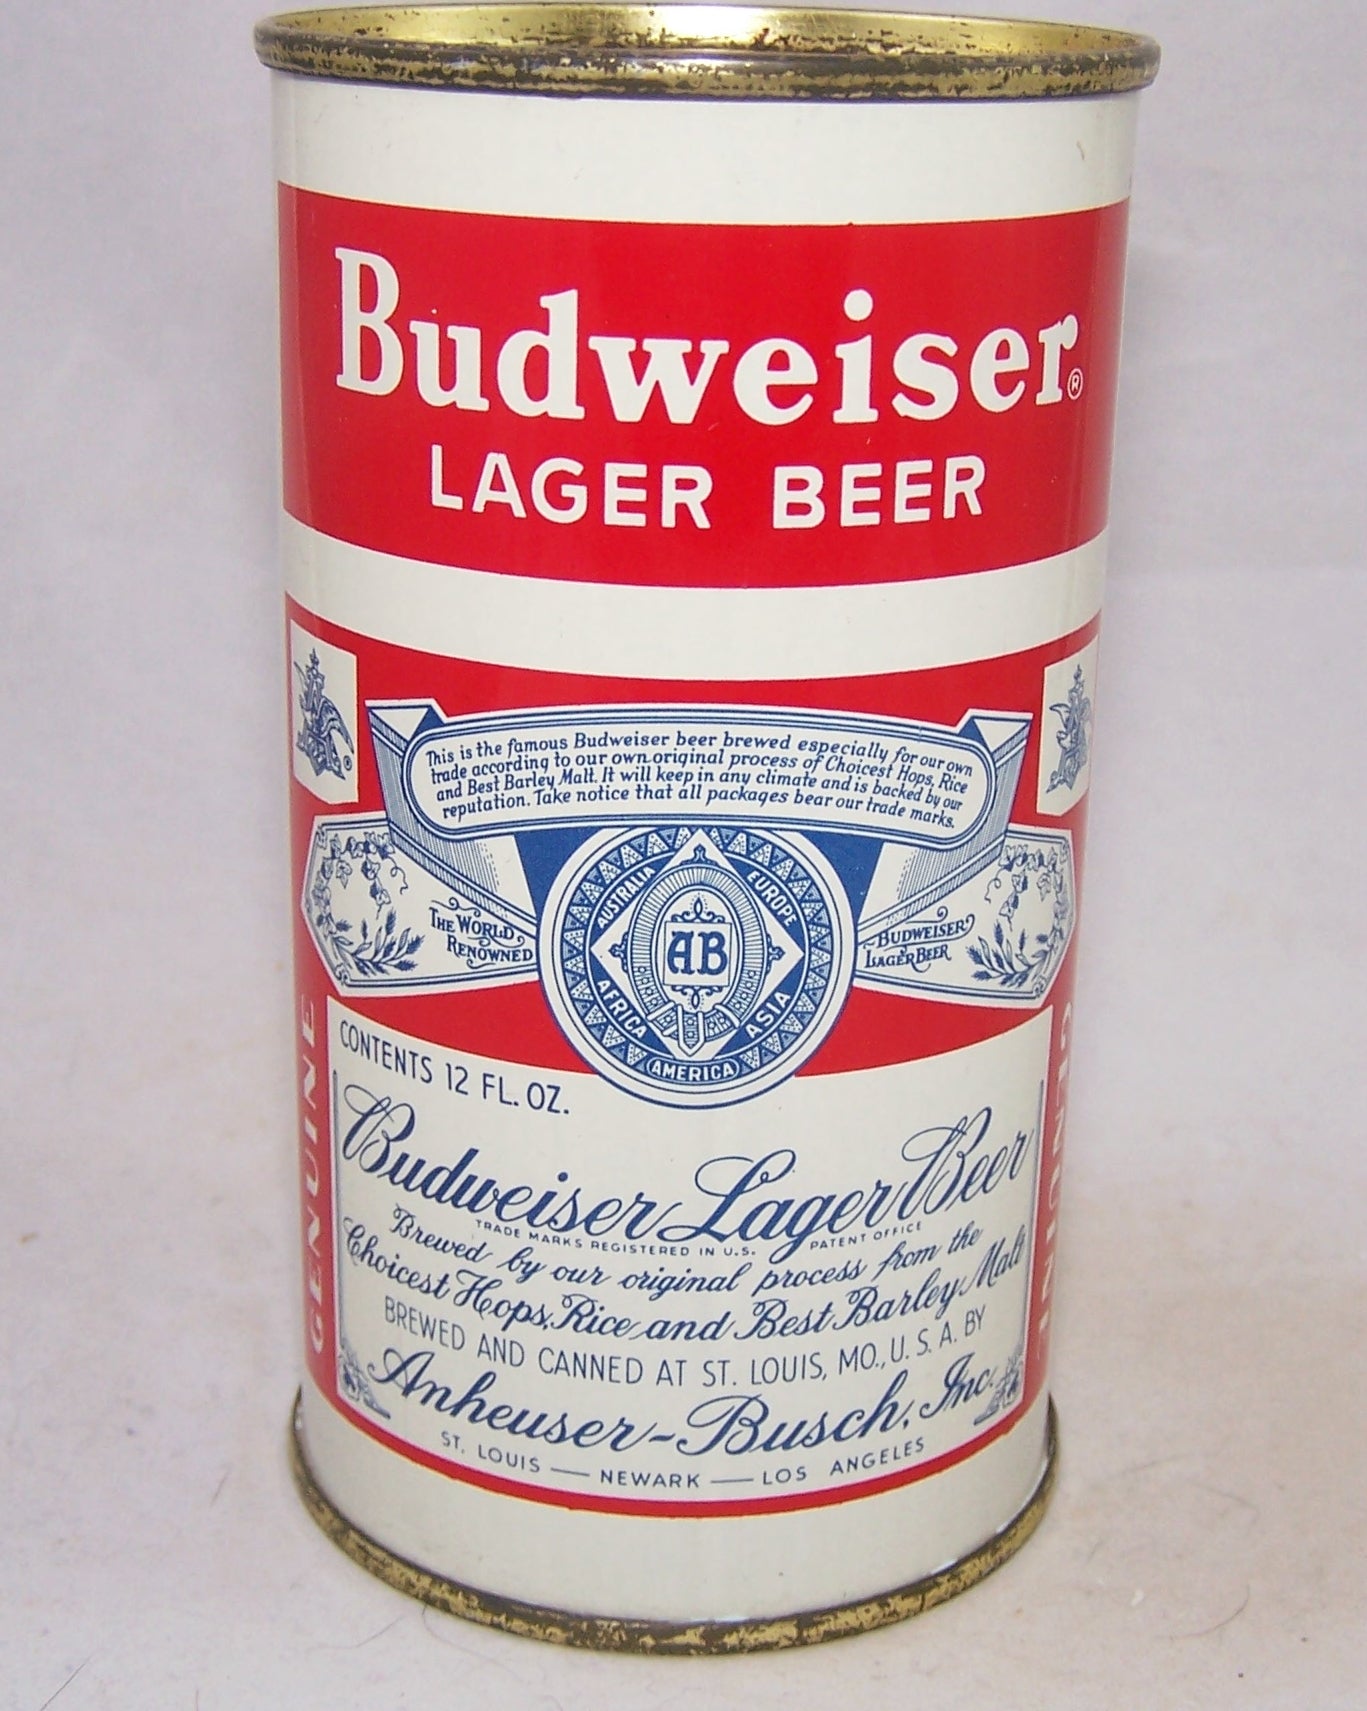 Budweiser Lager Beer, (3 City) USBC 44-13, Grade 1+ Sold on 02/19/18